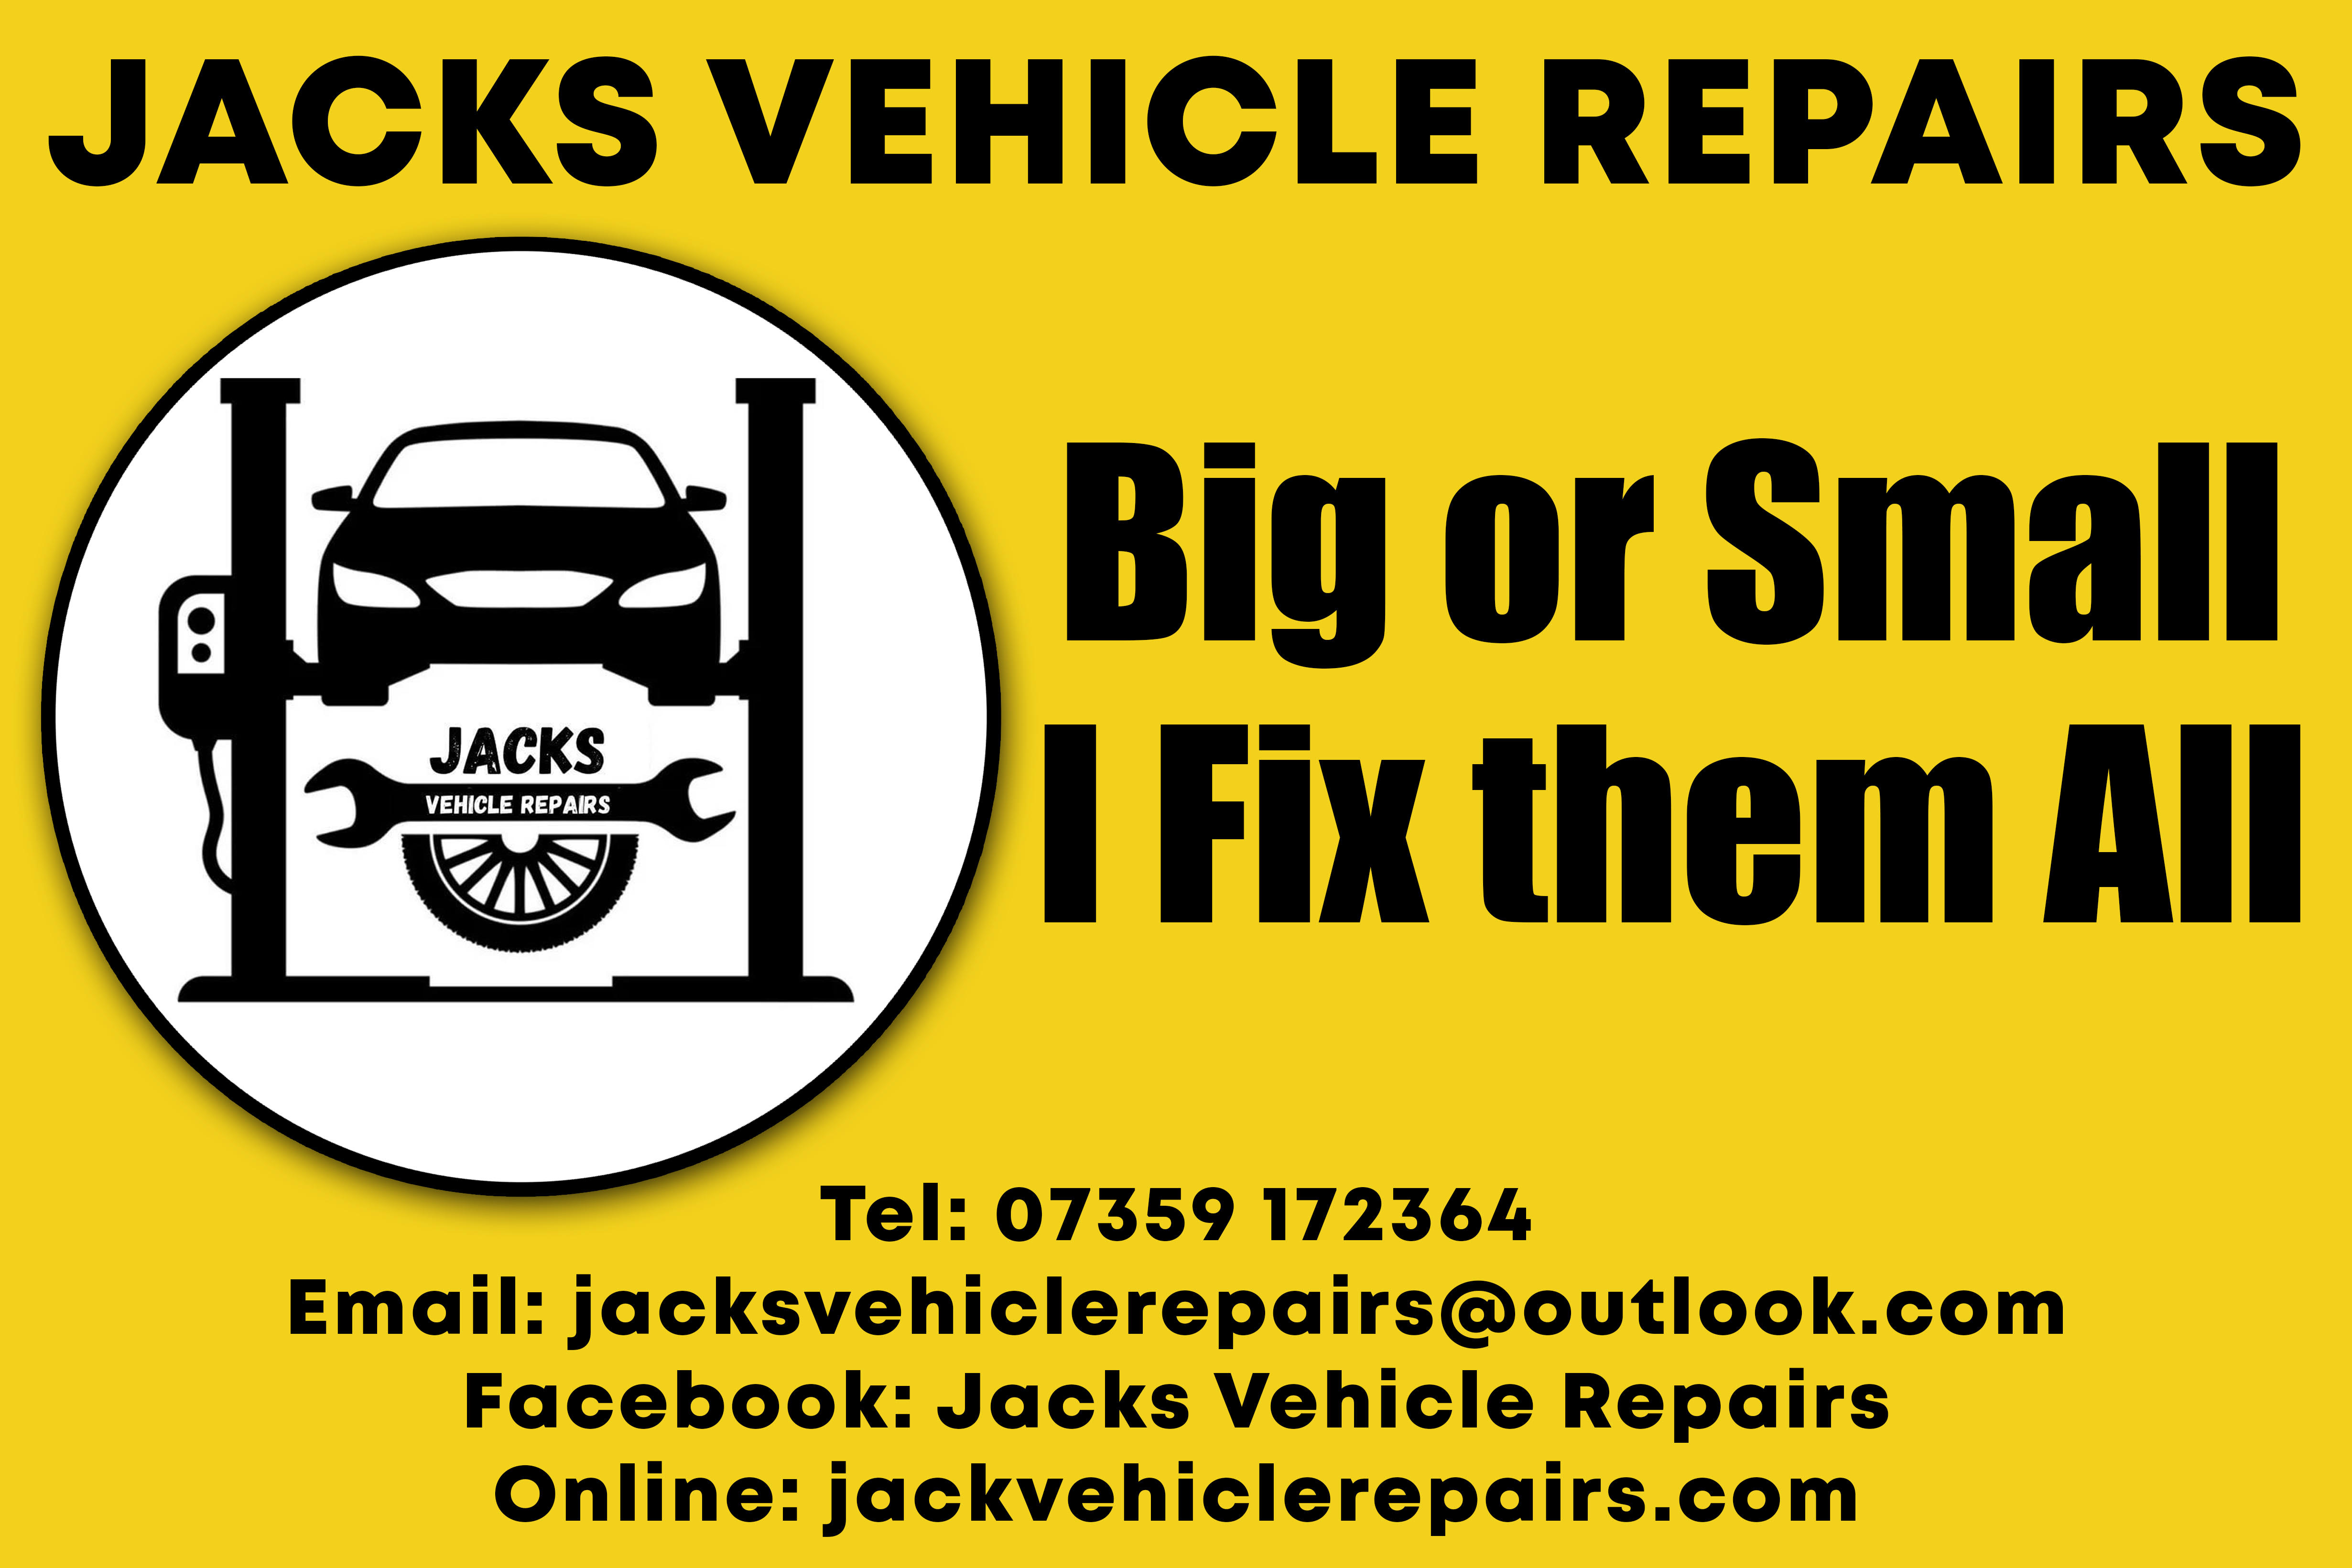 Jacks Vehicle Repairs